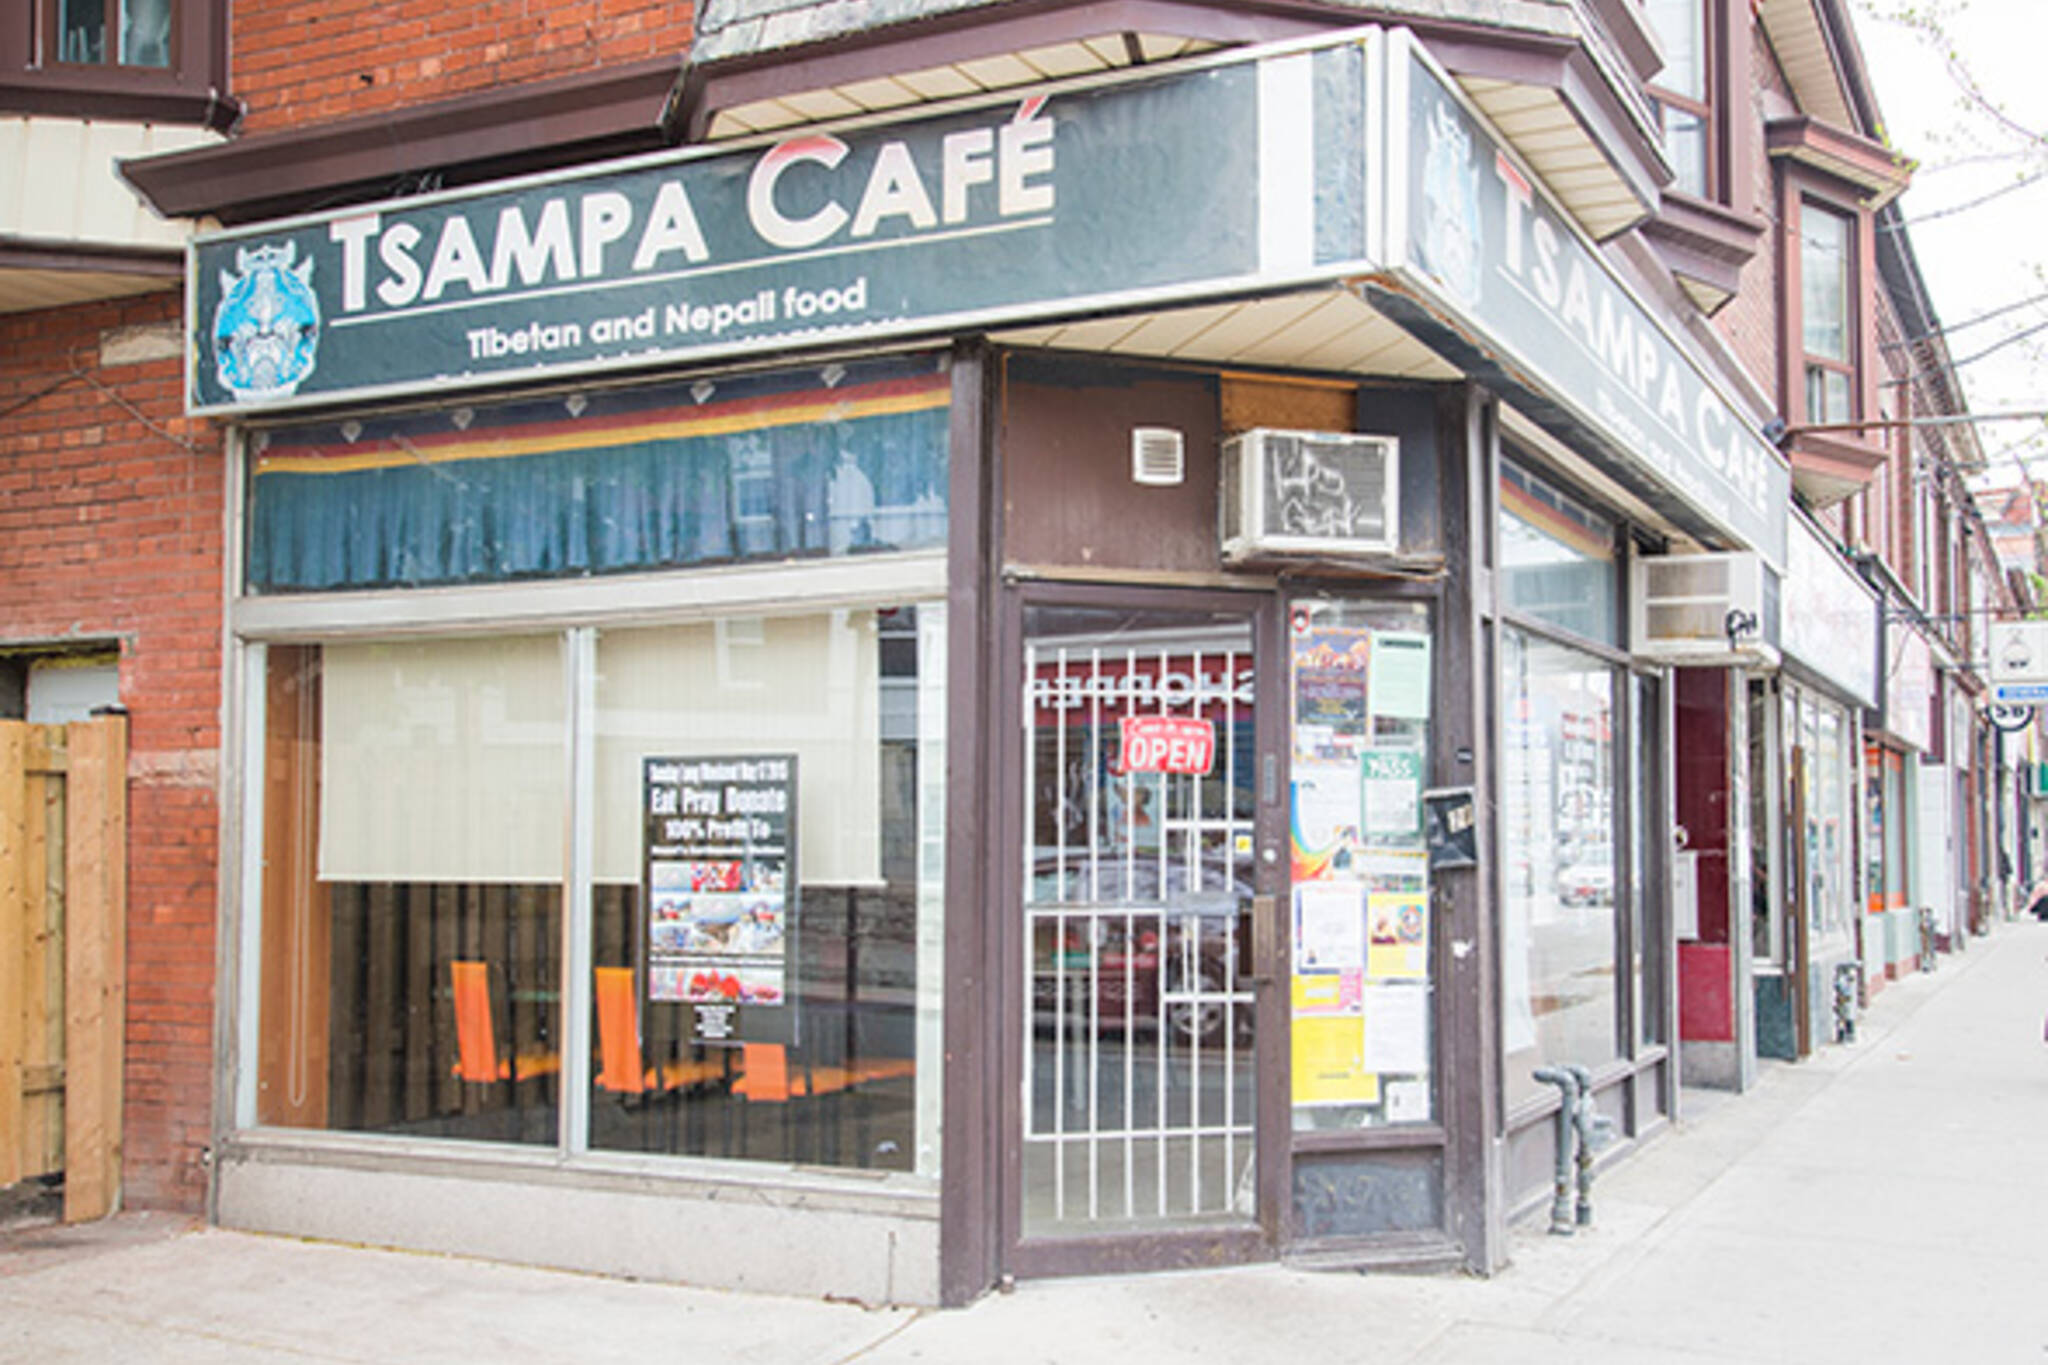 Tsampa Cafe Toronto